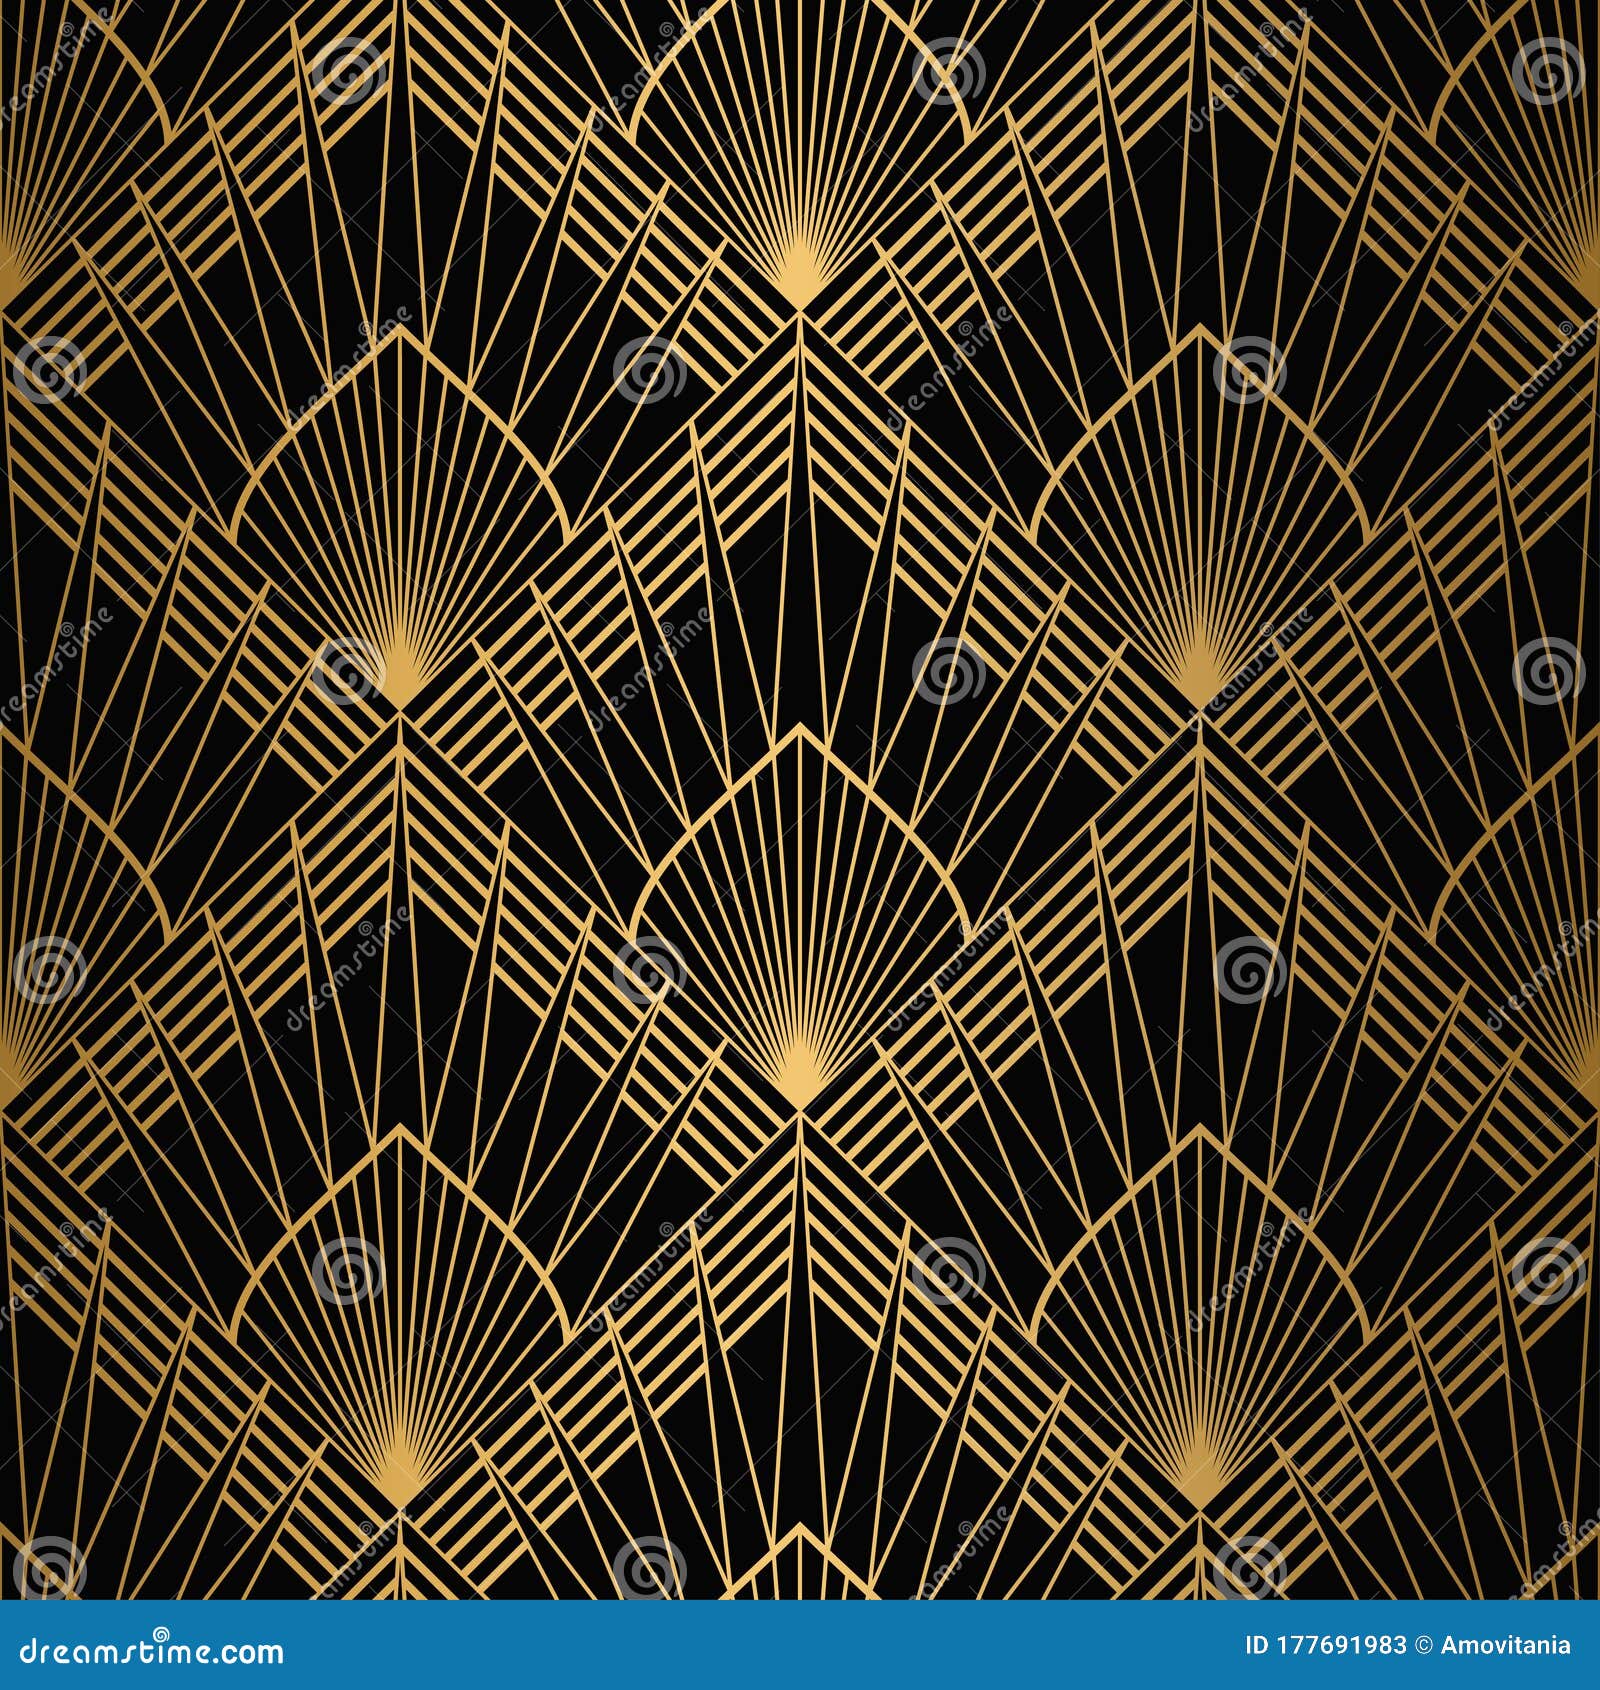 Art Deco Pattern Images - Free Download on Freepik